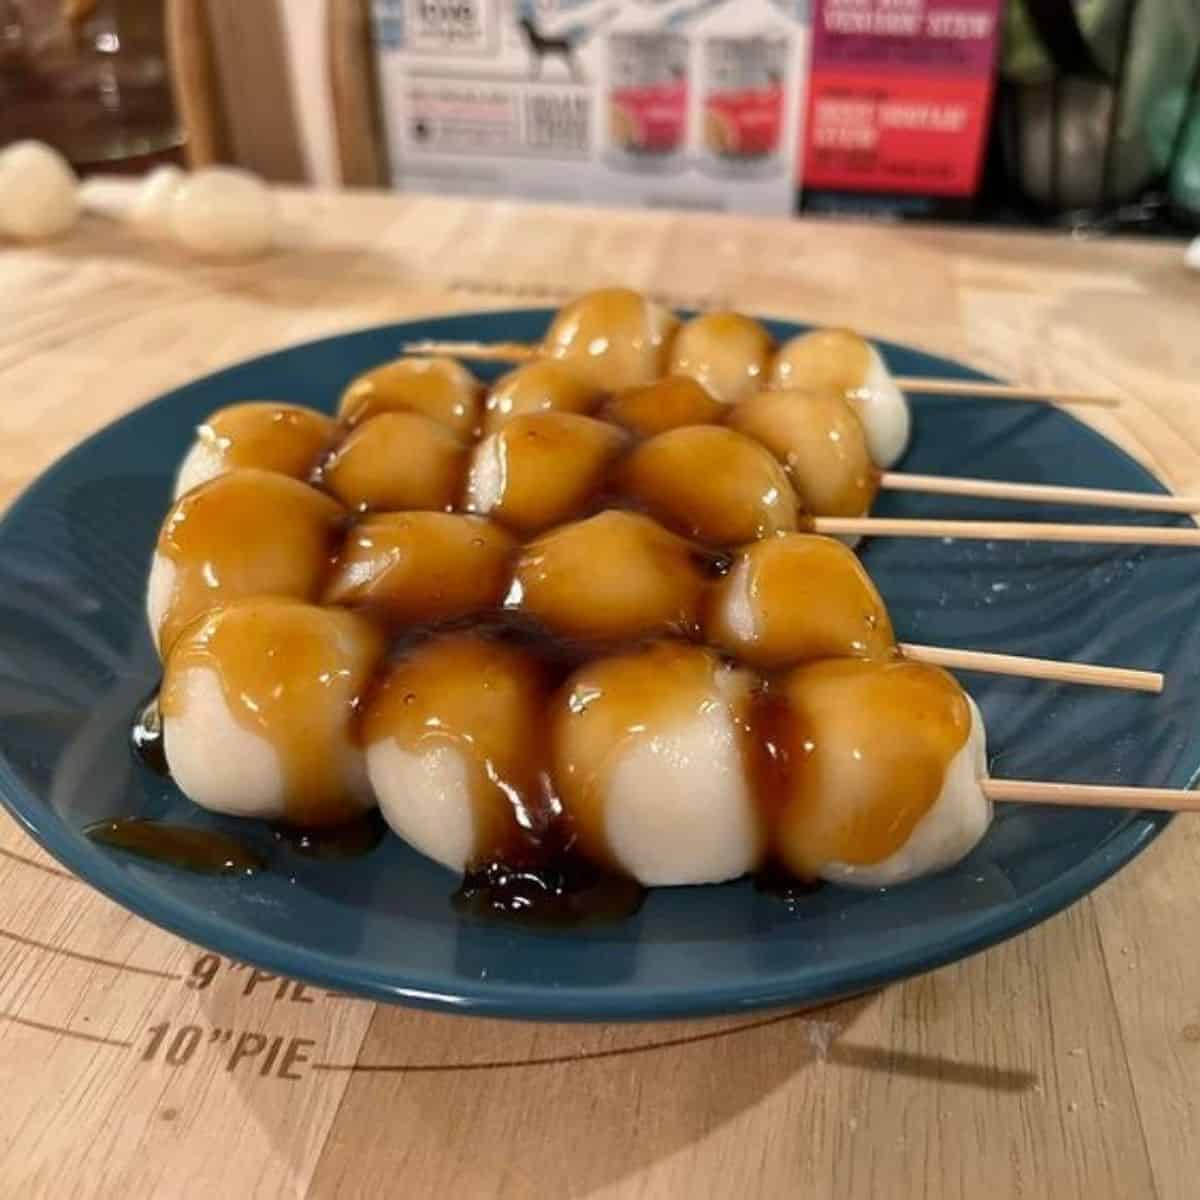 dango with sweet soy sauce glaze